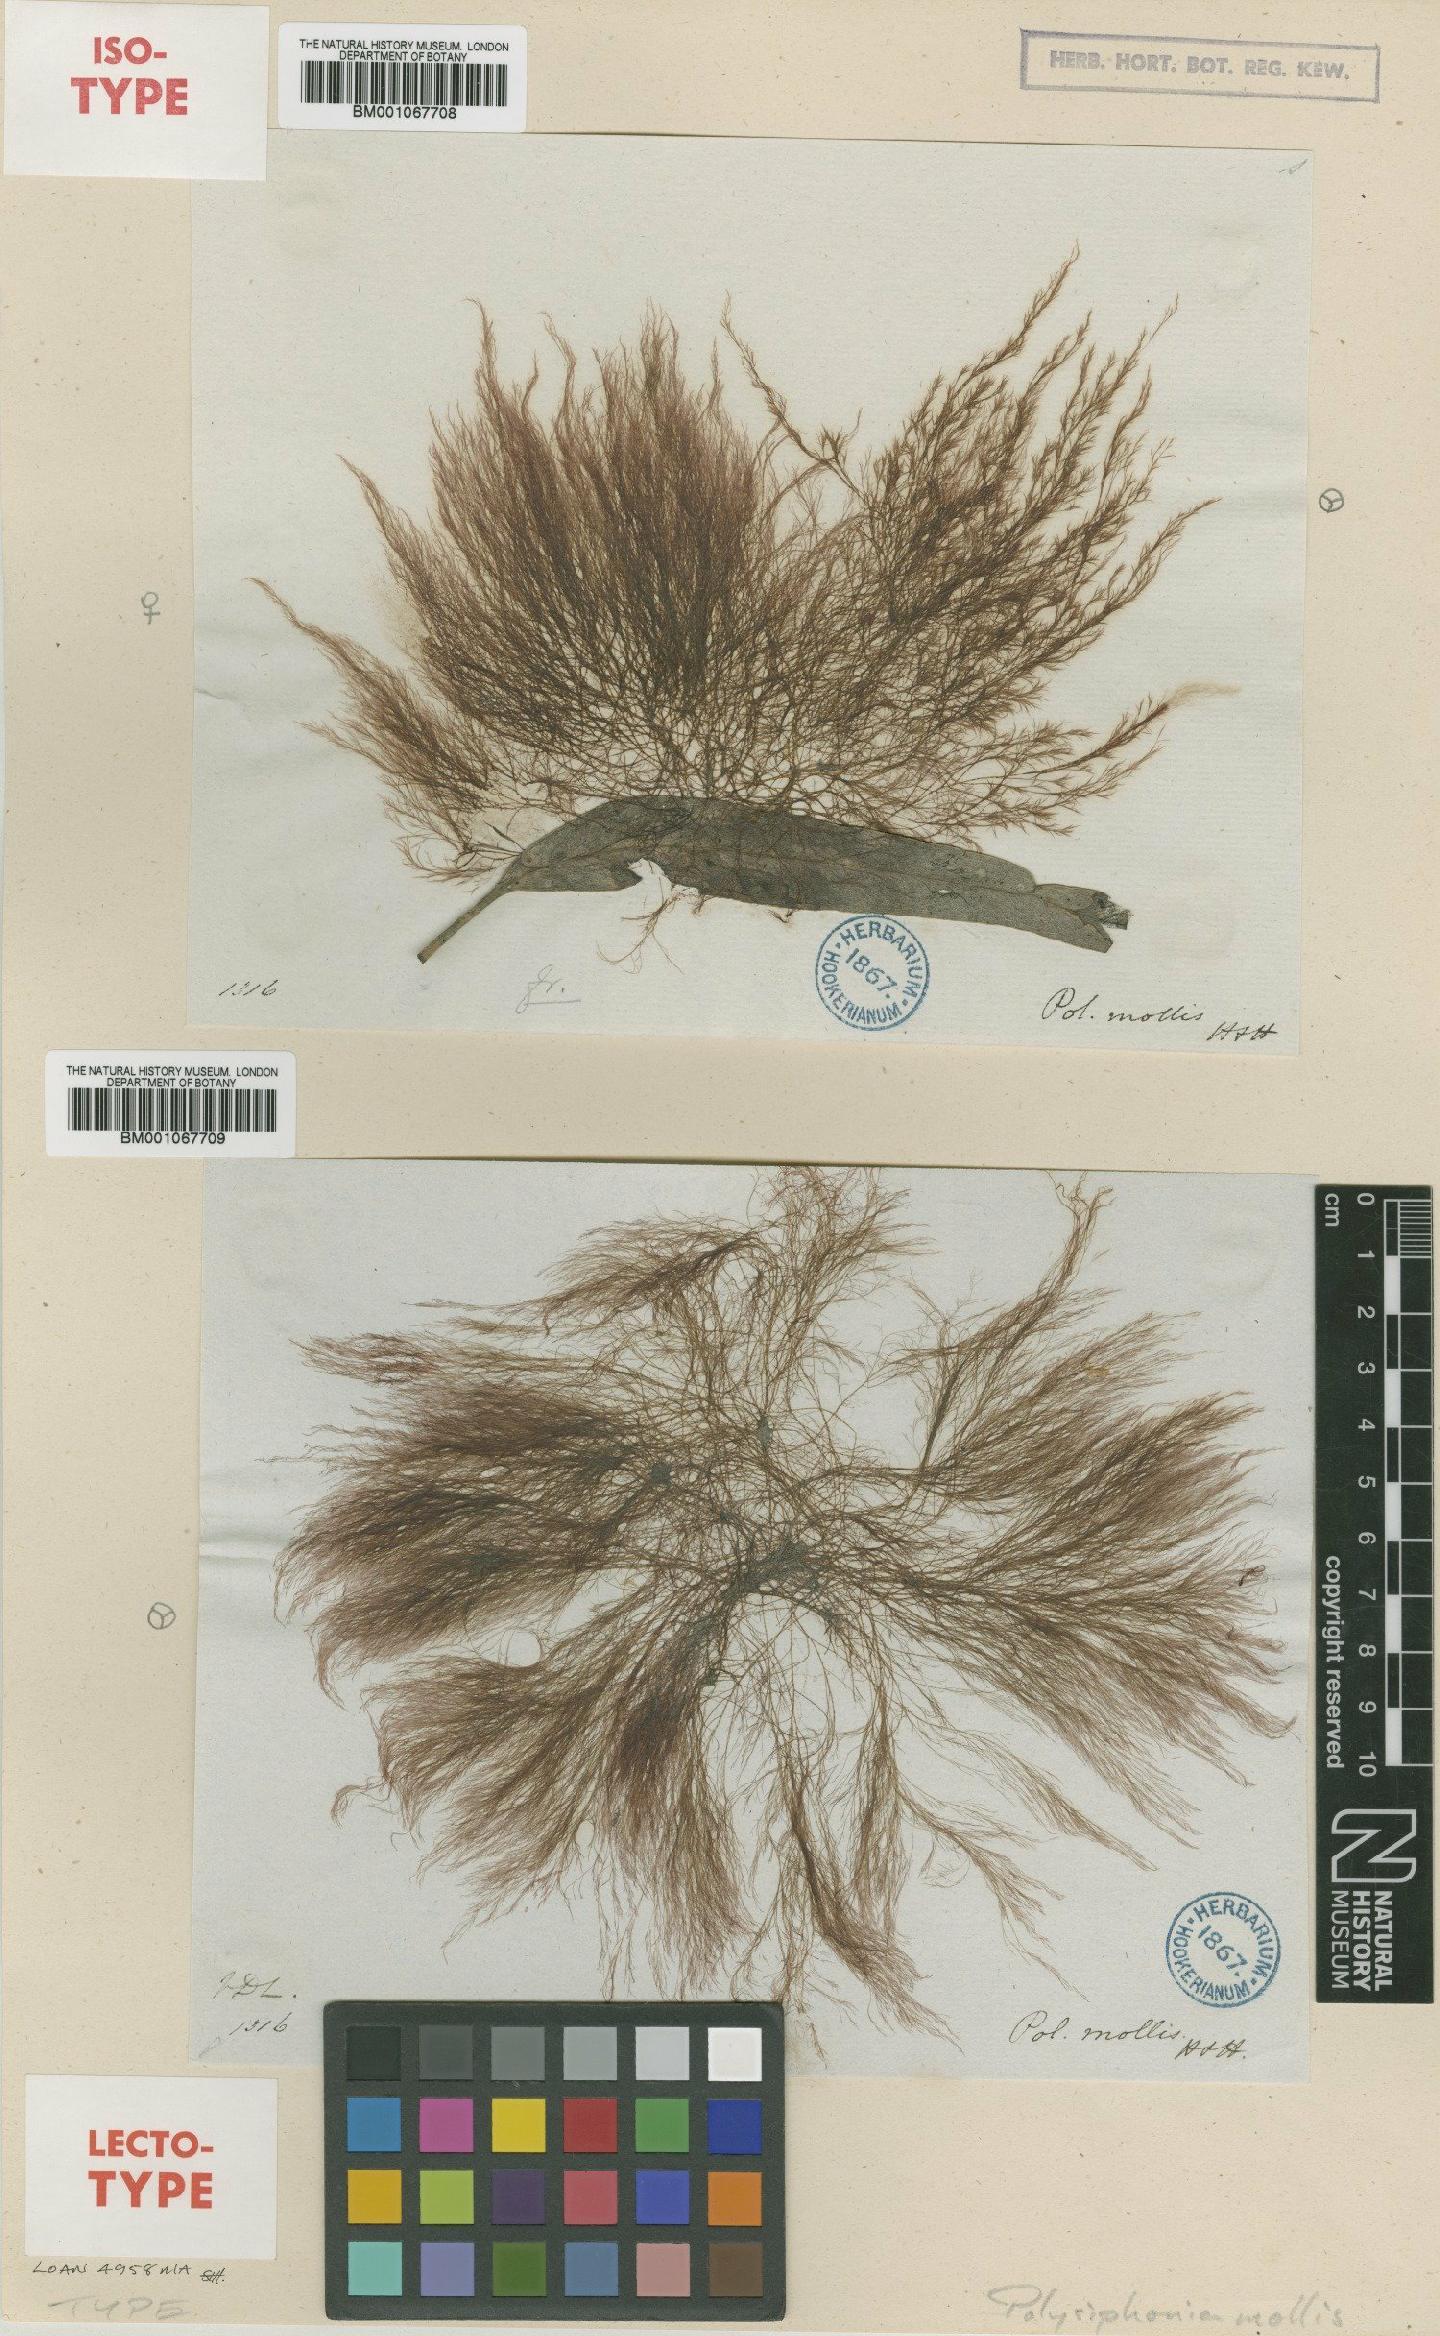 To NHMUK collection (Polysiphonia mollis Hook.f. & Harv.; Isotype; NHMUK:ecatalogue:2311852)